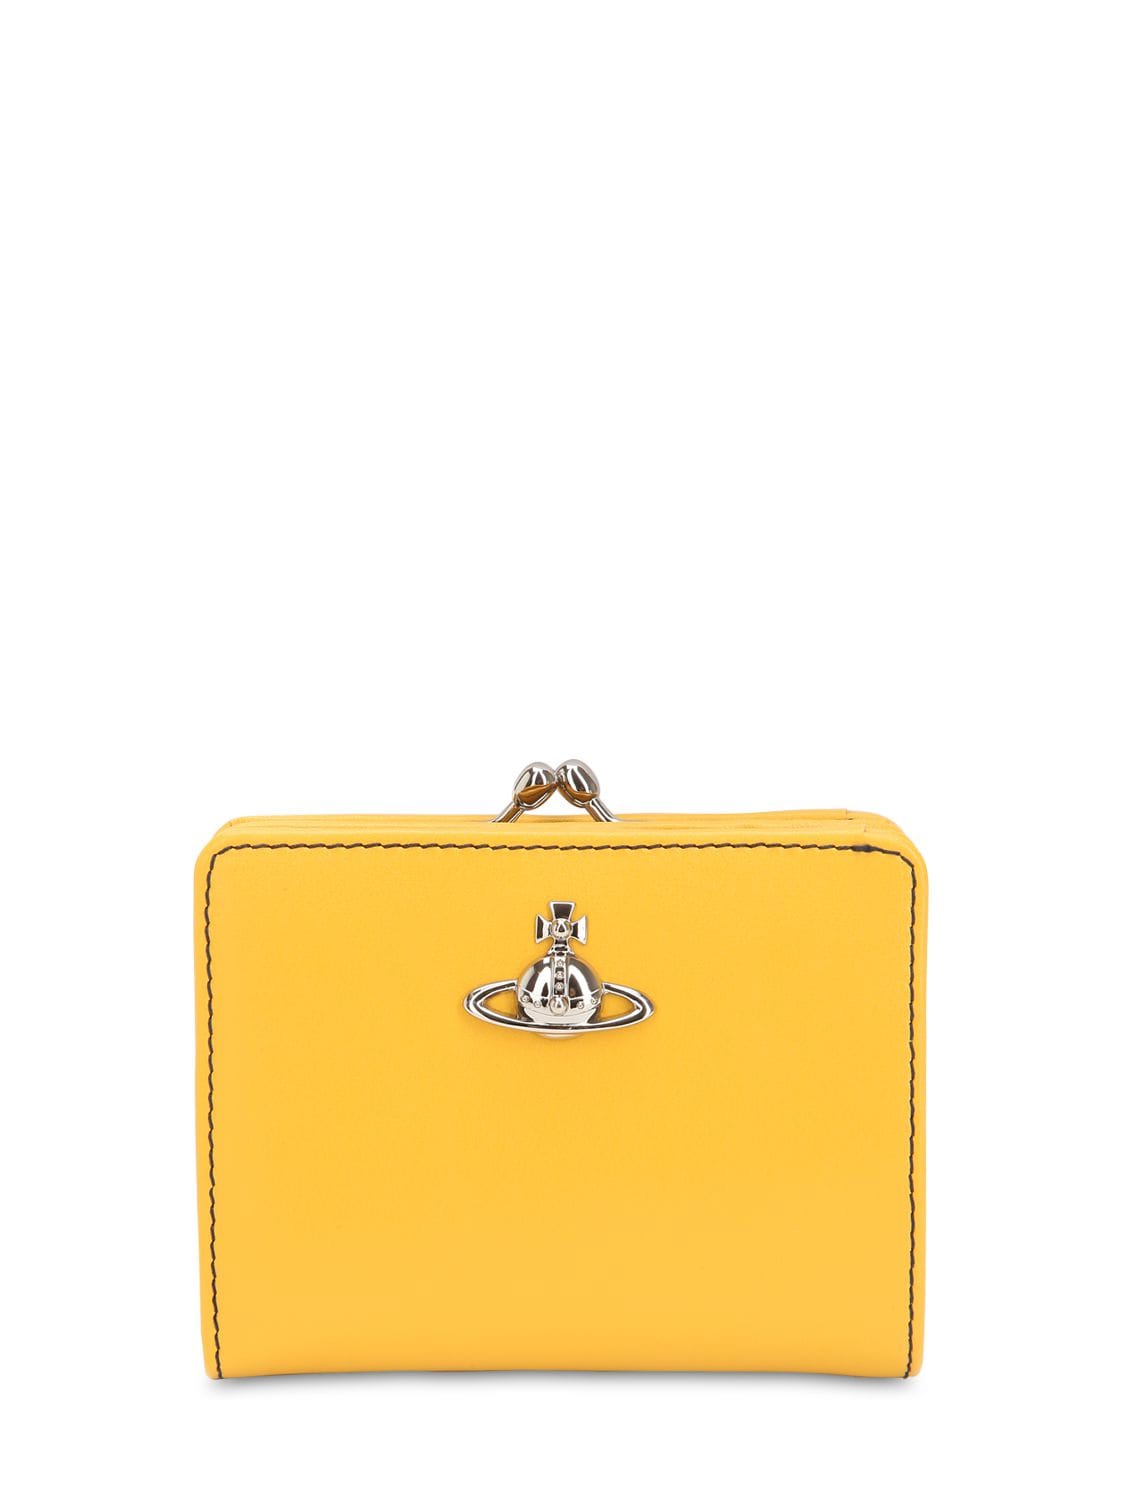 Vivienne Westwood Matilda Leather Wallet In Yellow | ModeSens